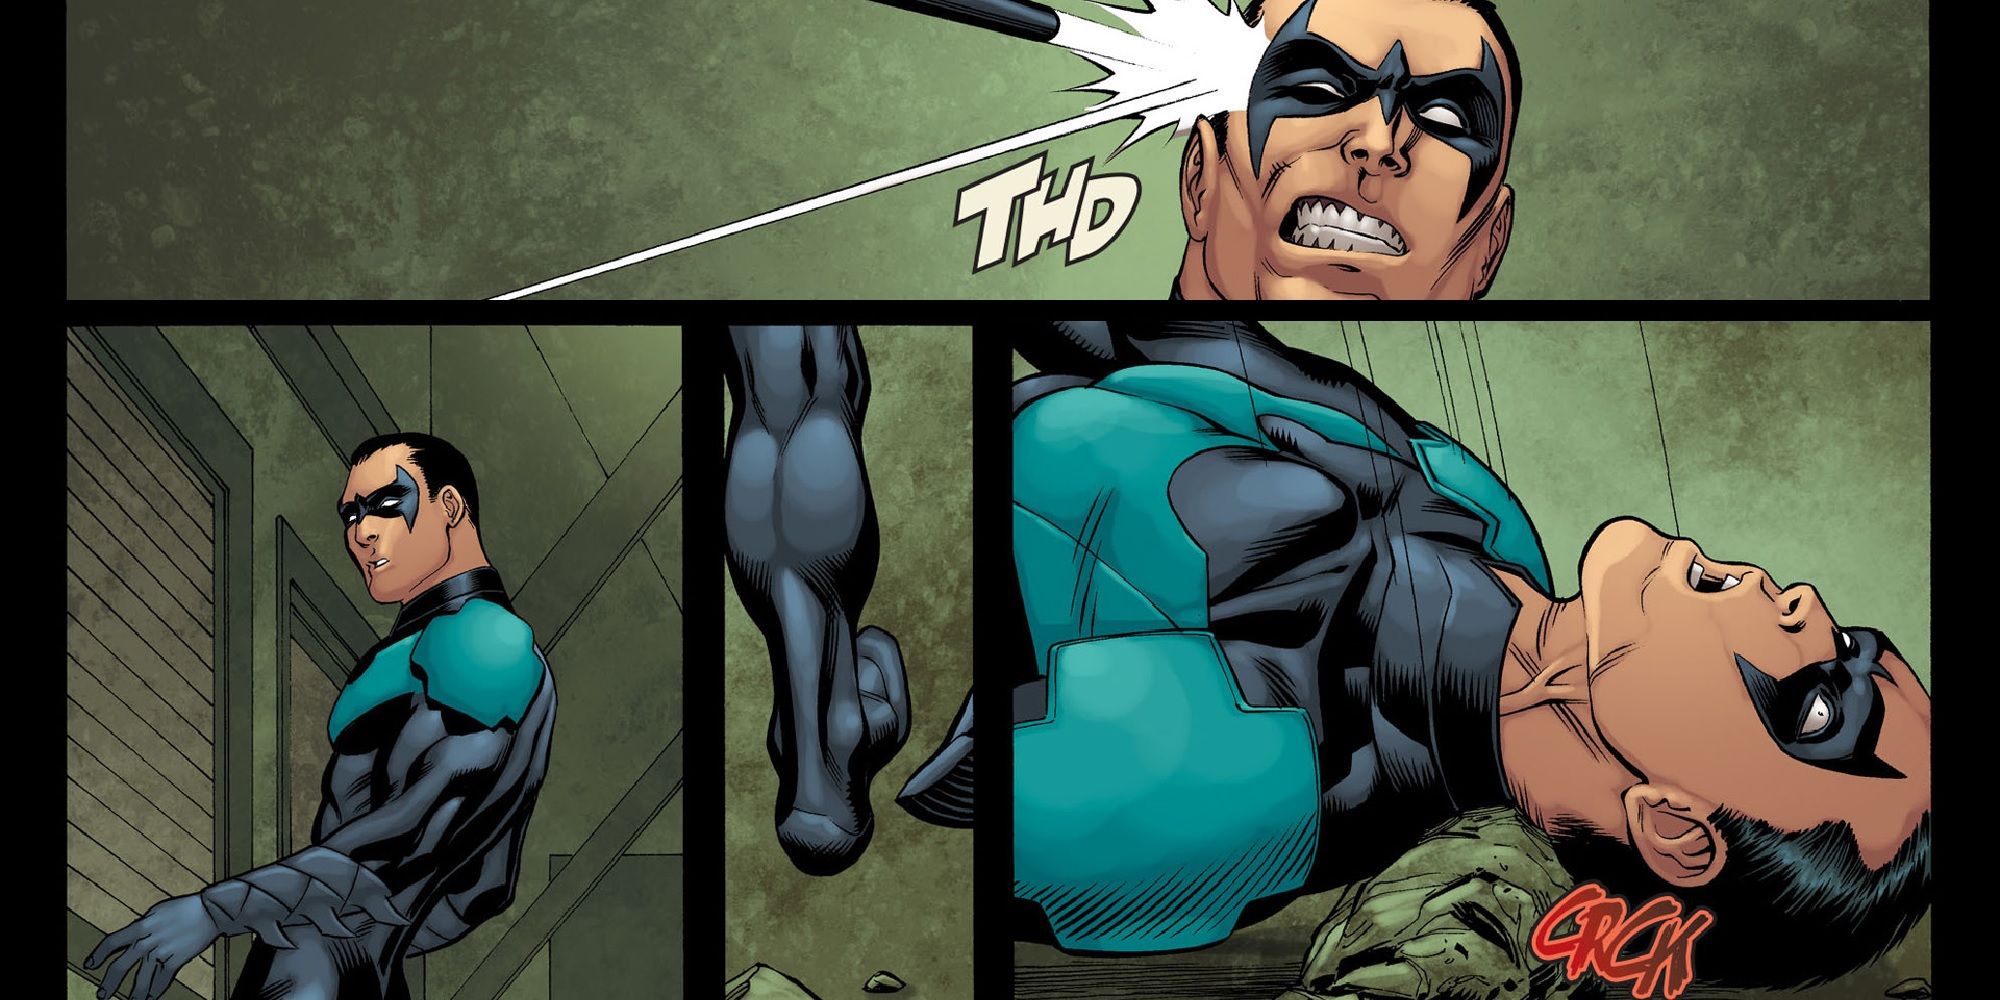 Nightwing's unfortunate death in Injustice